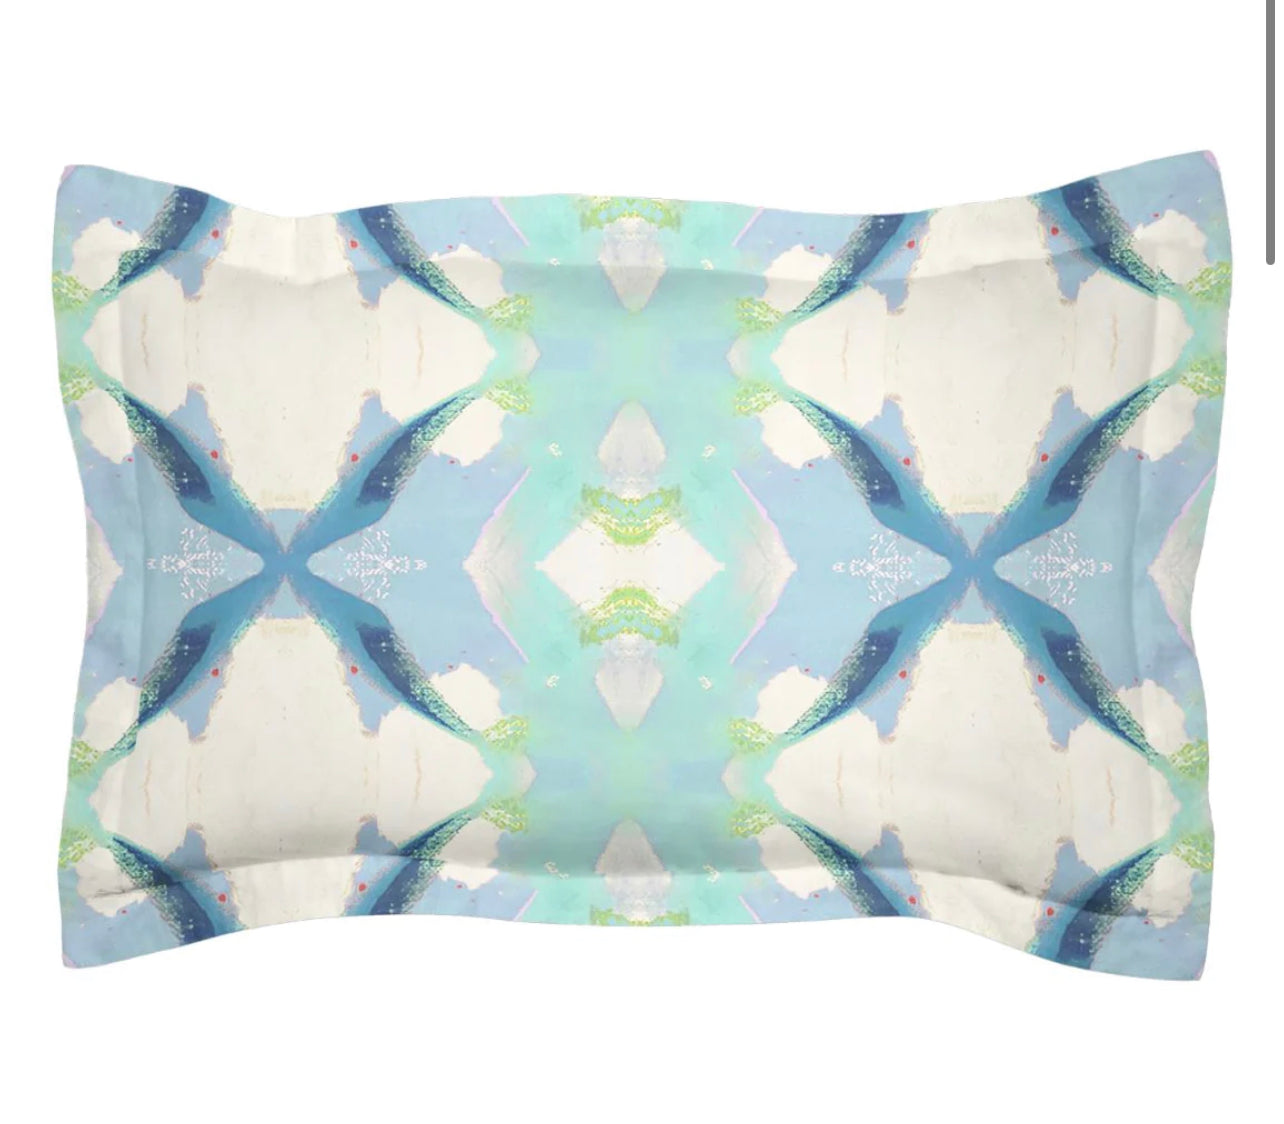 Jasmin Blue Pillow Sham (Microlux Fabric) Prices start at $112.00.